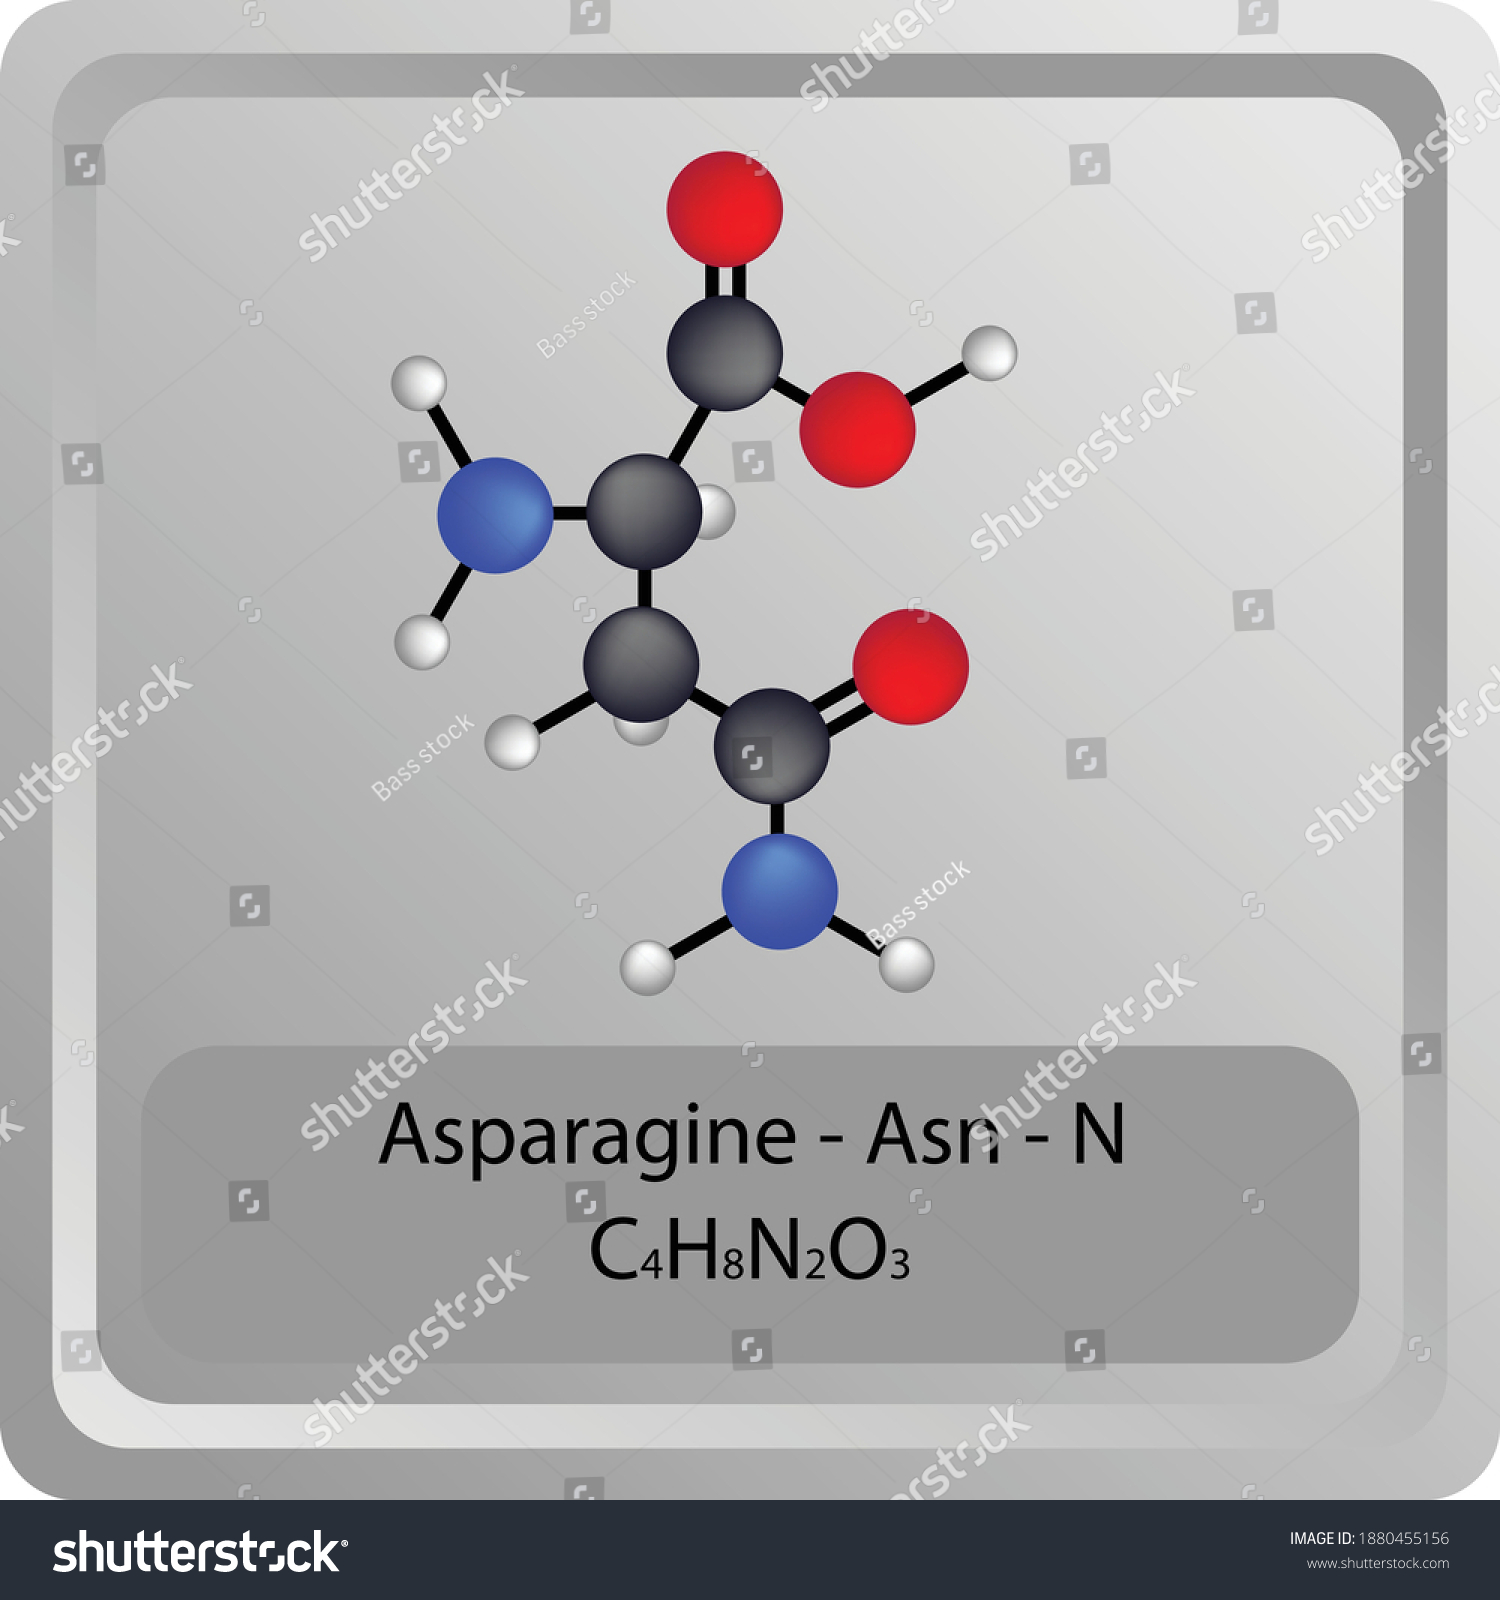 Asparagine Asn N Amino Acid Chemical Stock Vector Royalty Free ...